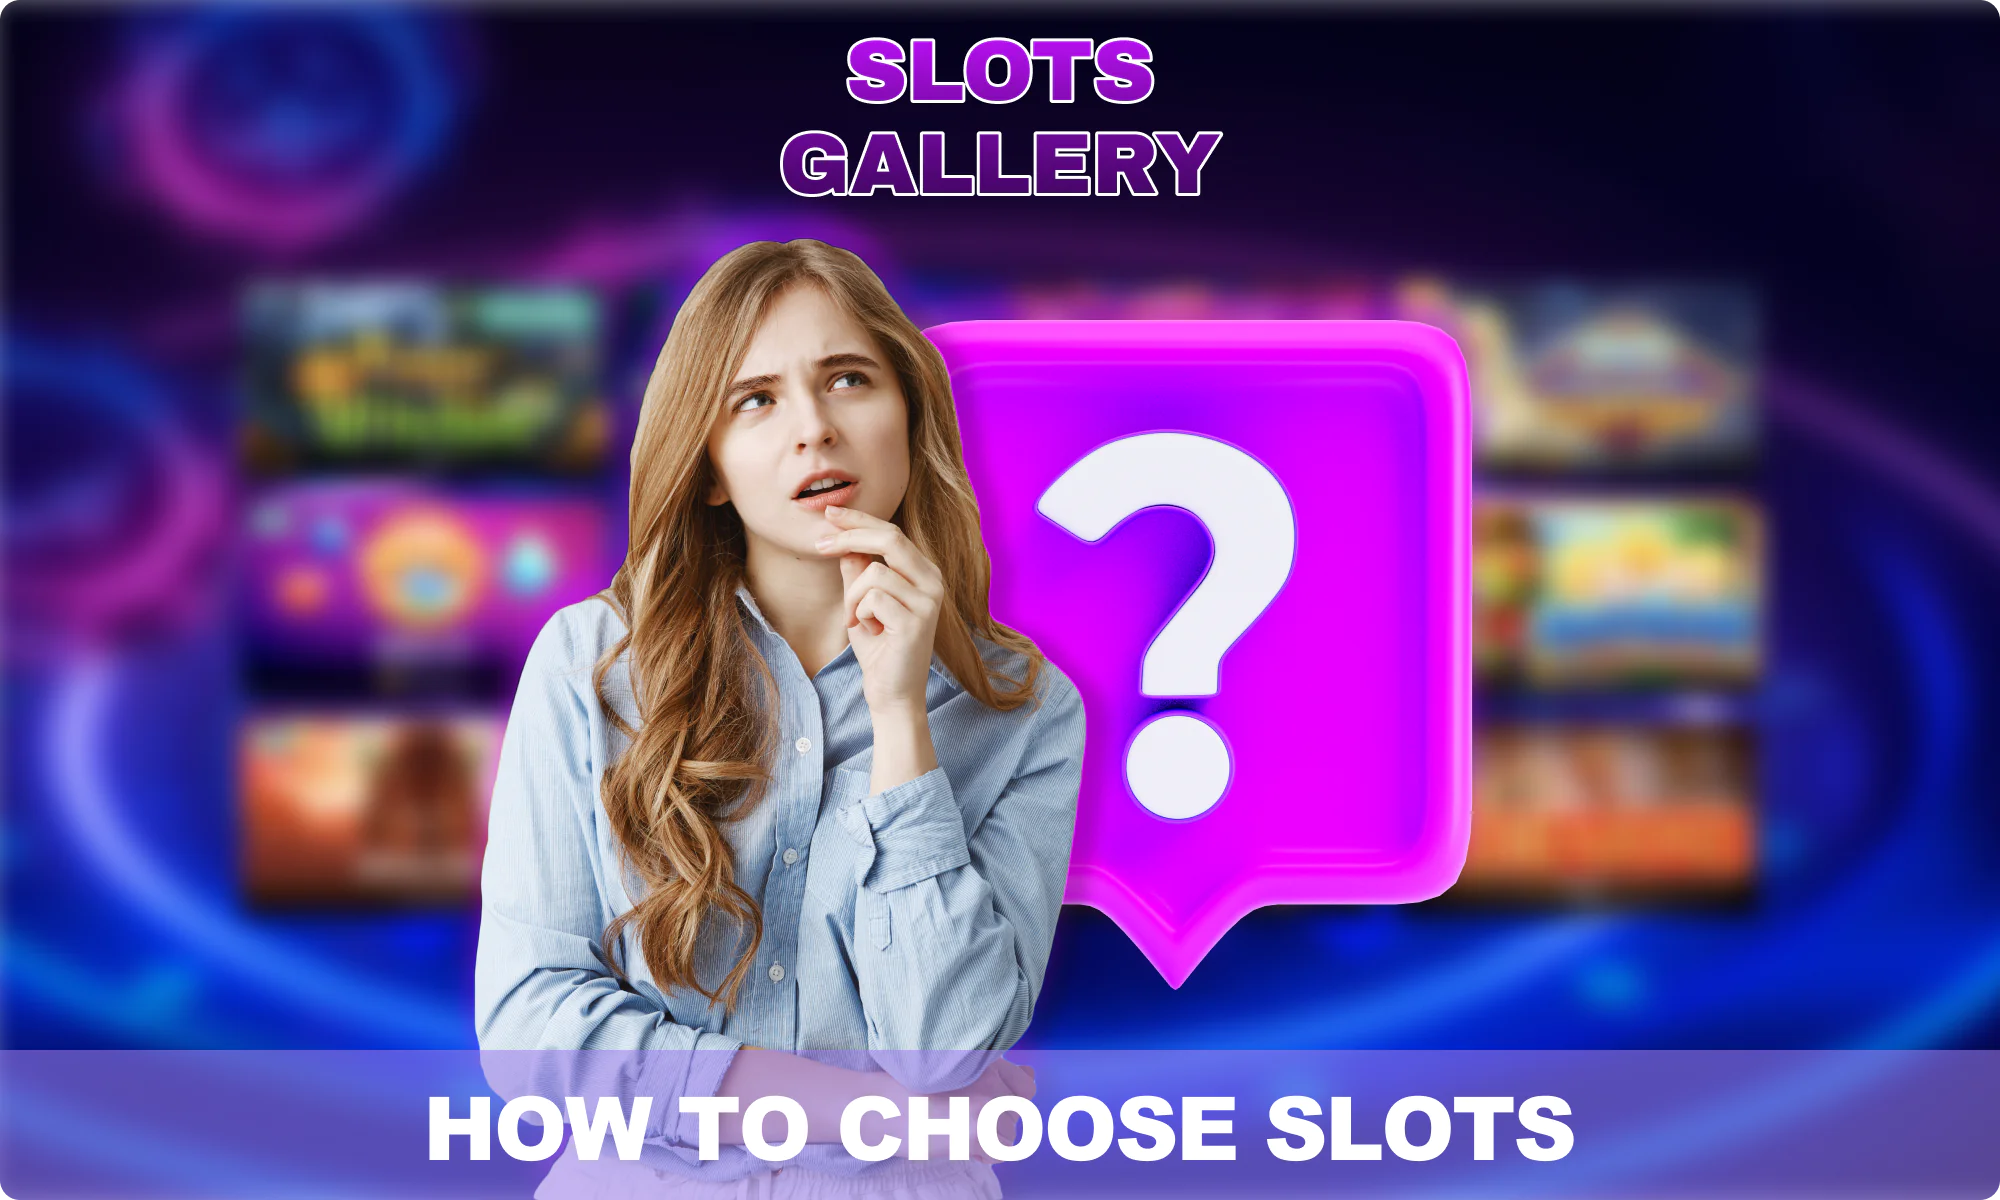 How to choose slots at Slots Gallery Casino